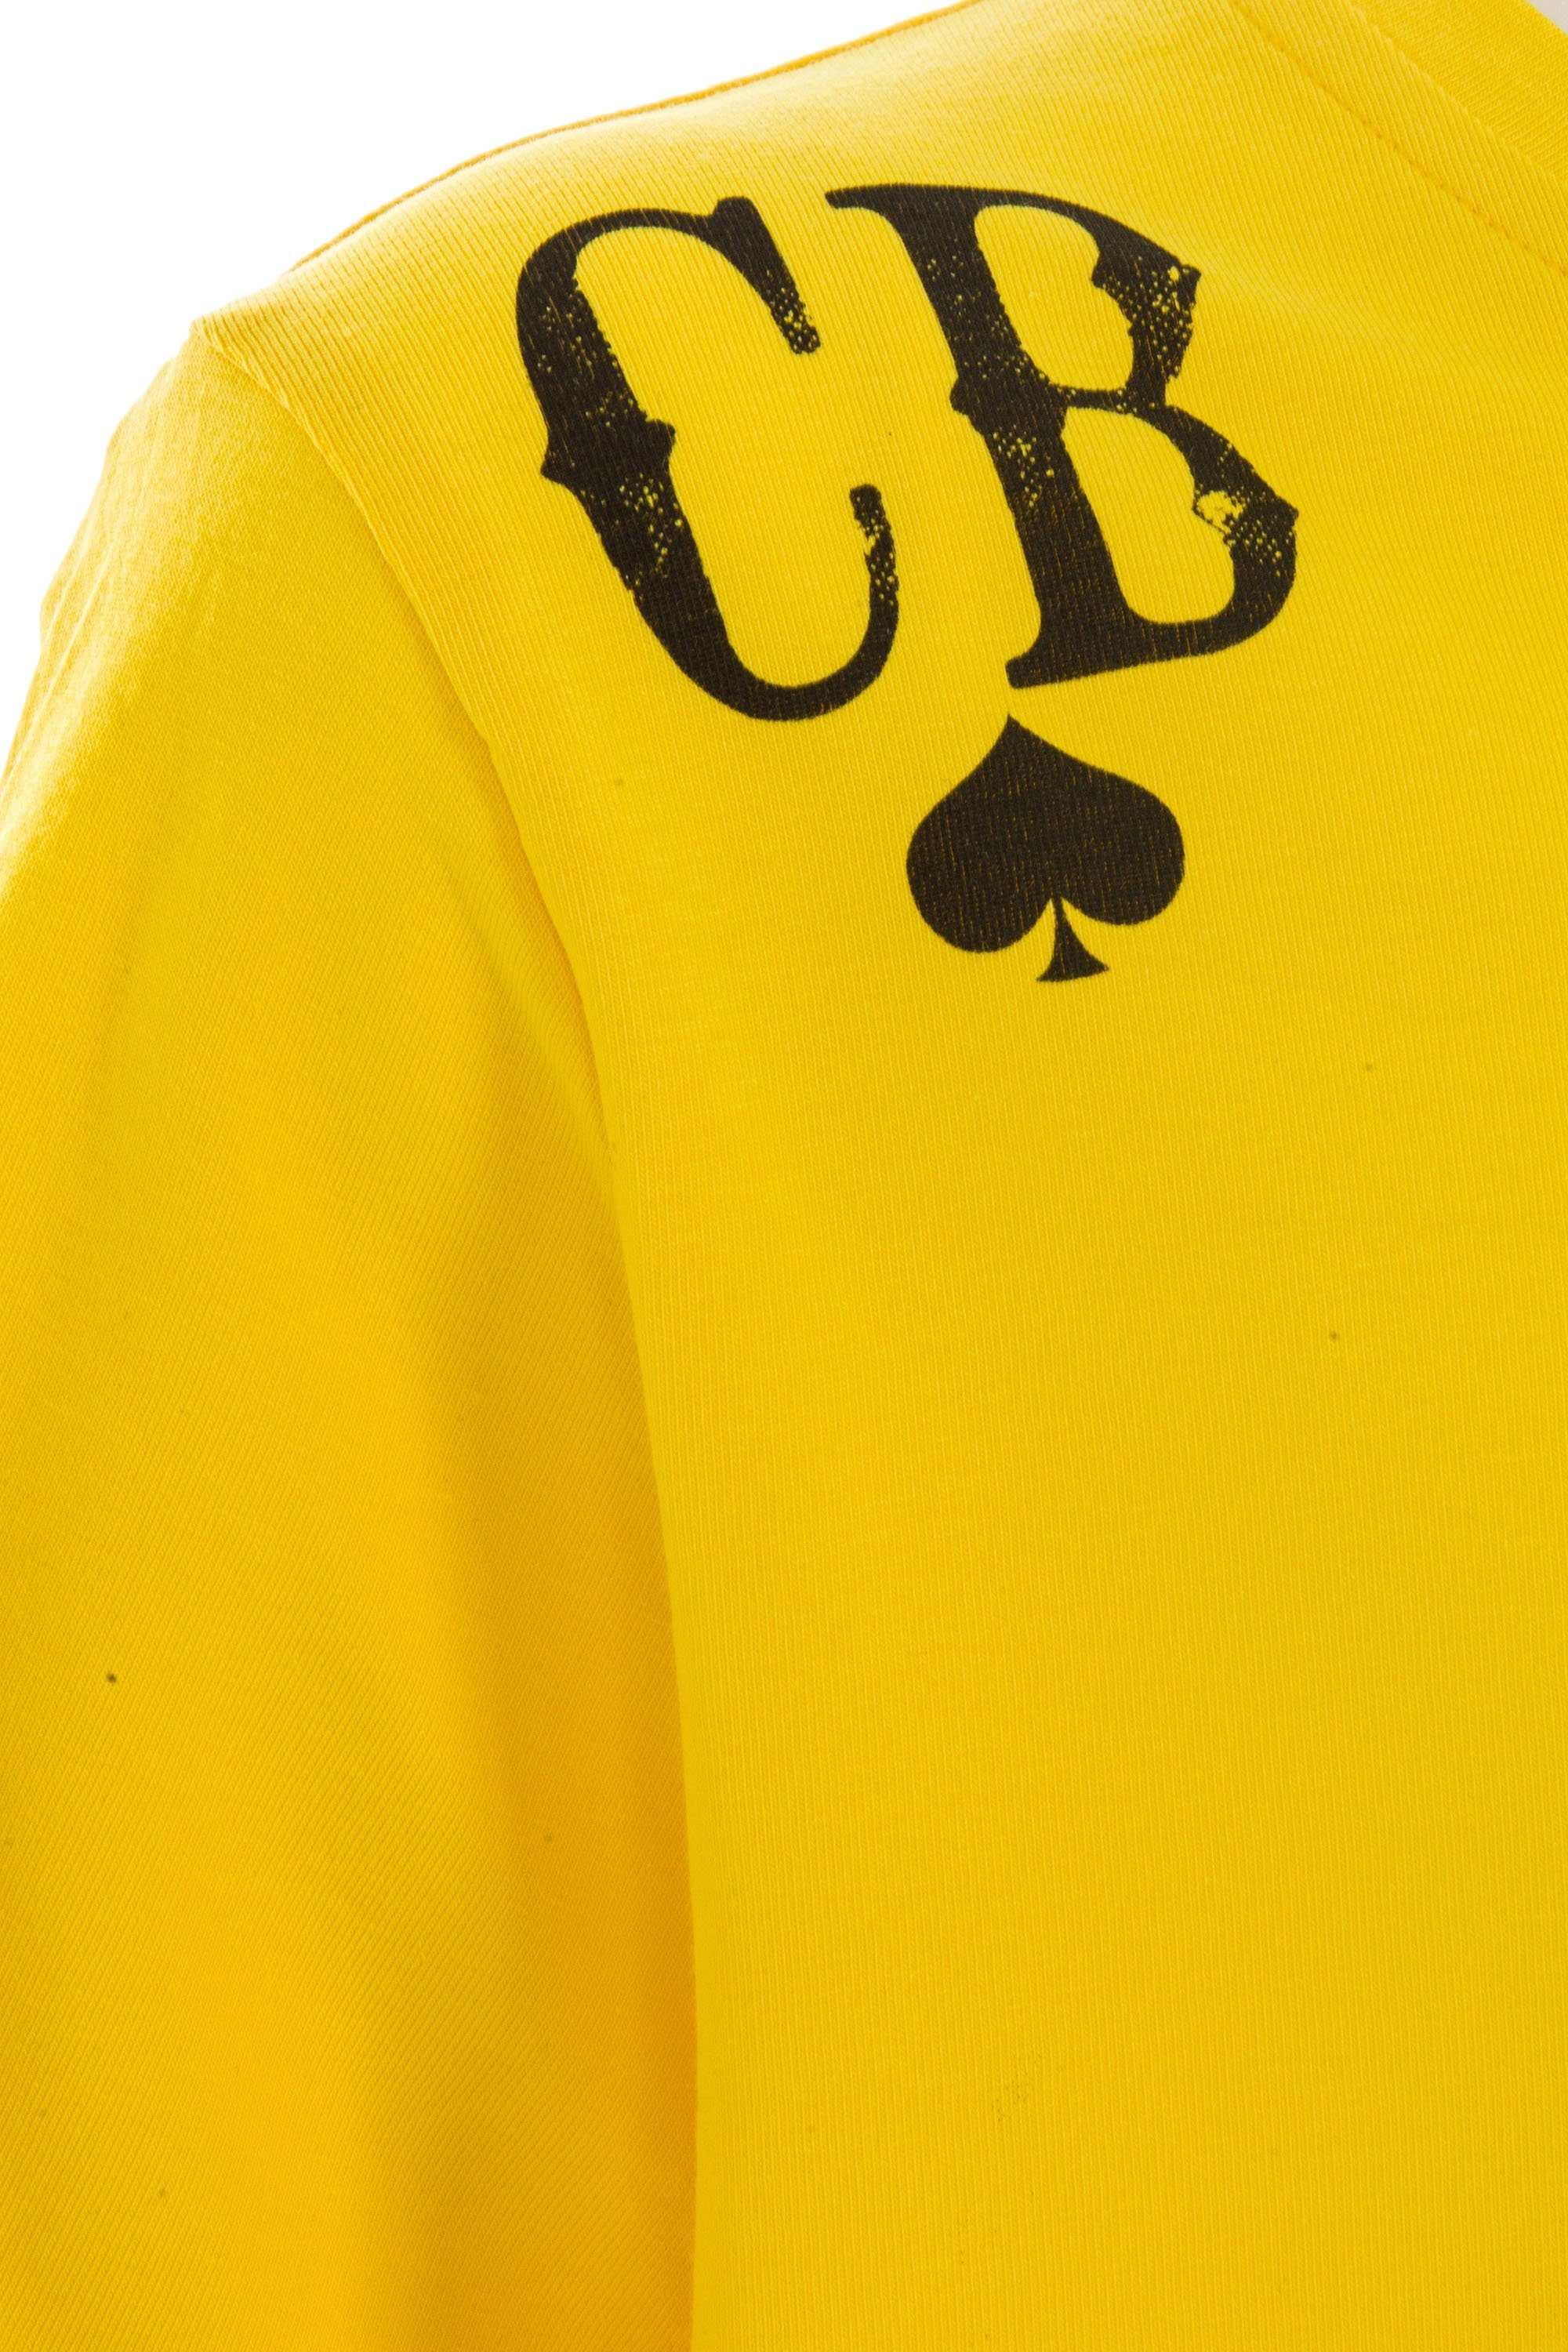 & Cipo T-Shirt Print Baxx coolem mit gelb-schwarz